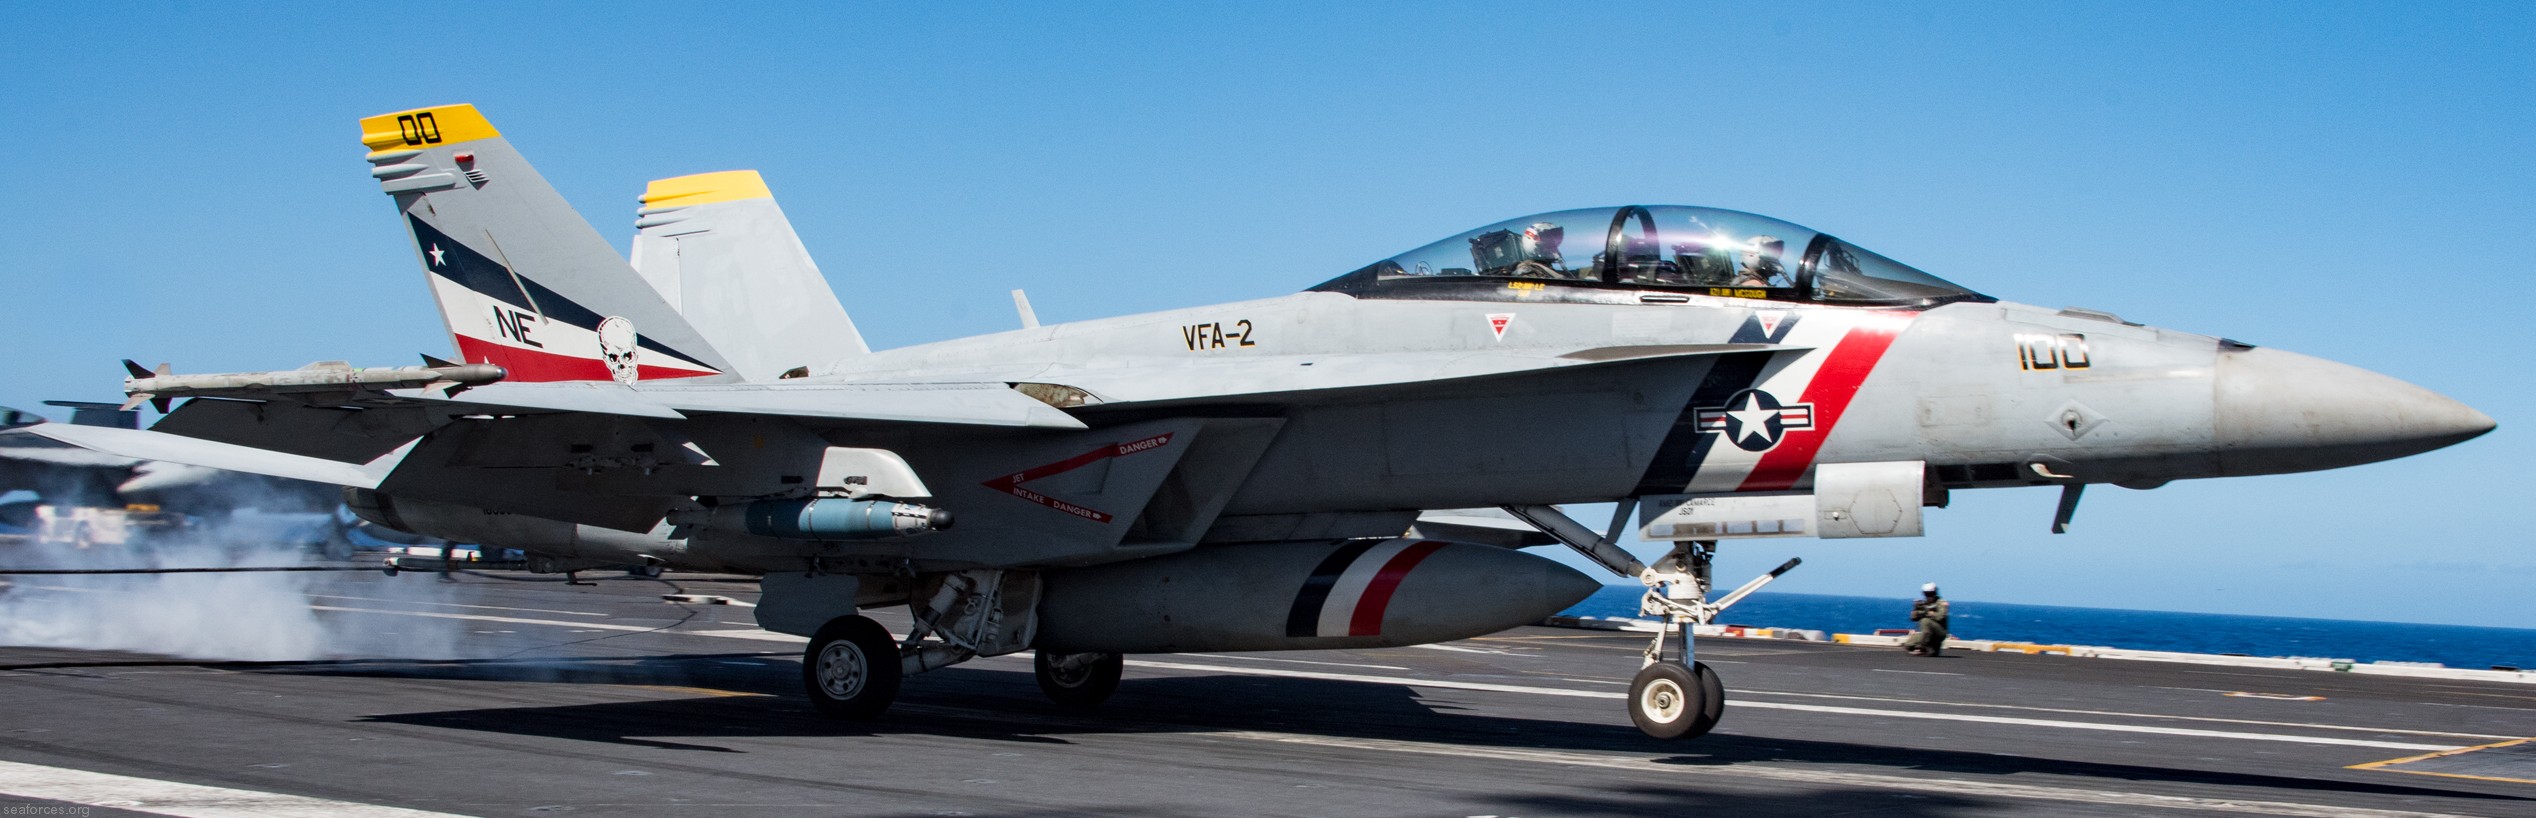 vfa-2 bounty hunters strike fighter squadron us navy f/a-18f super hornet carrier air wing cvw-2 uss carl vinson cvn-70 45